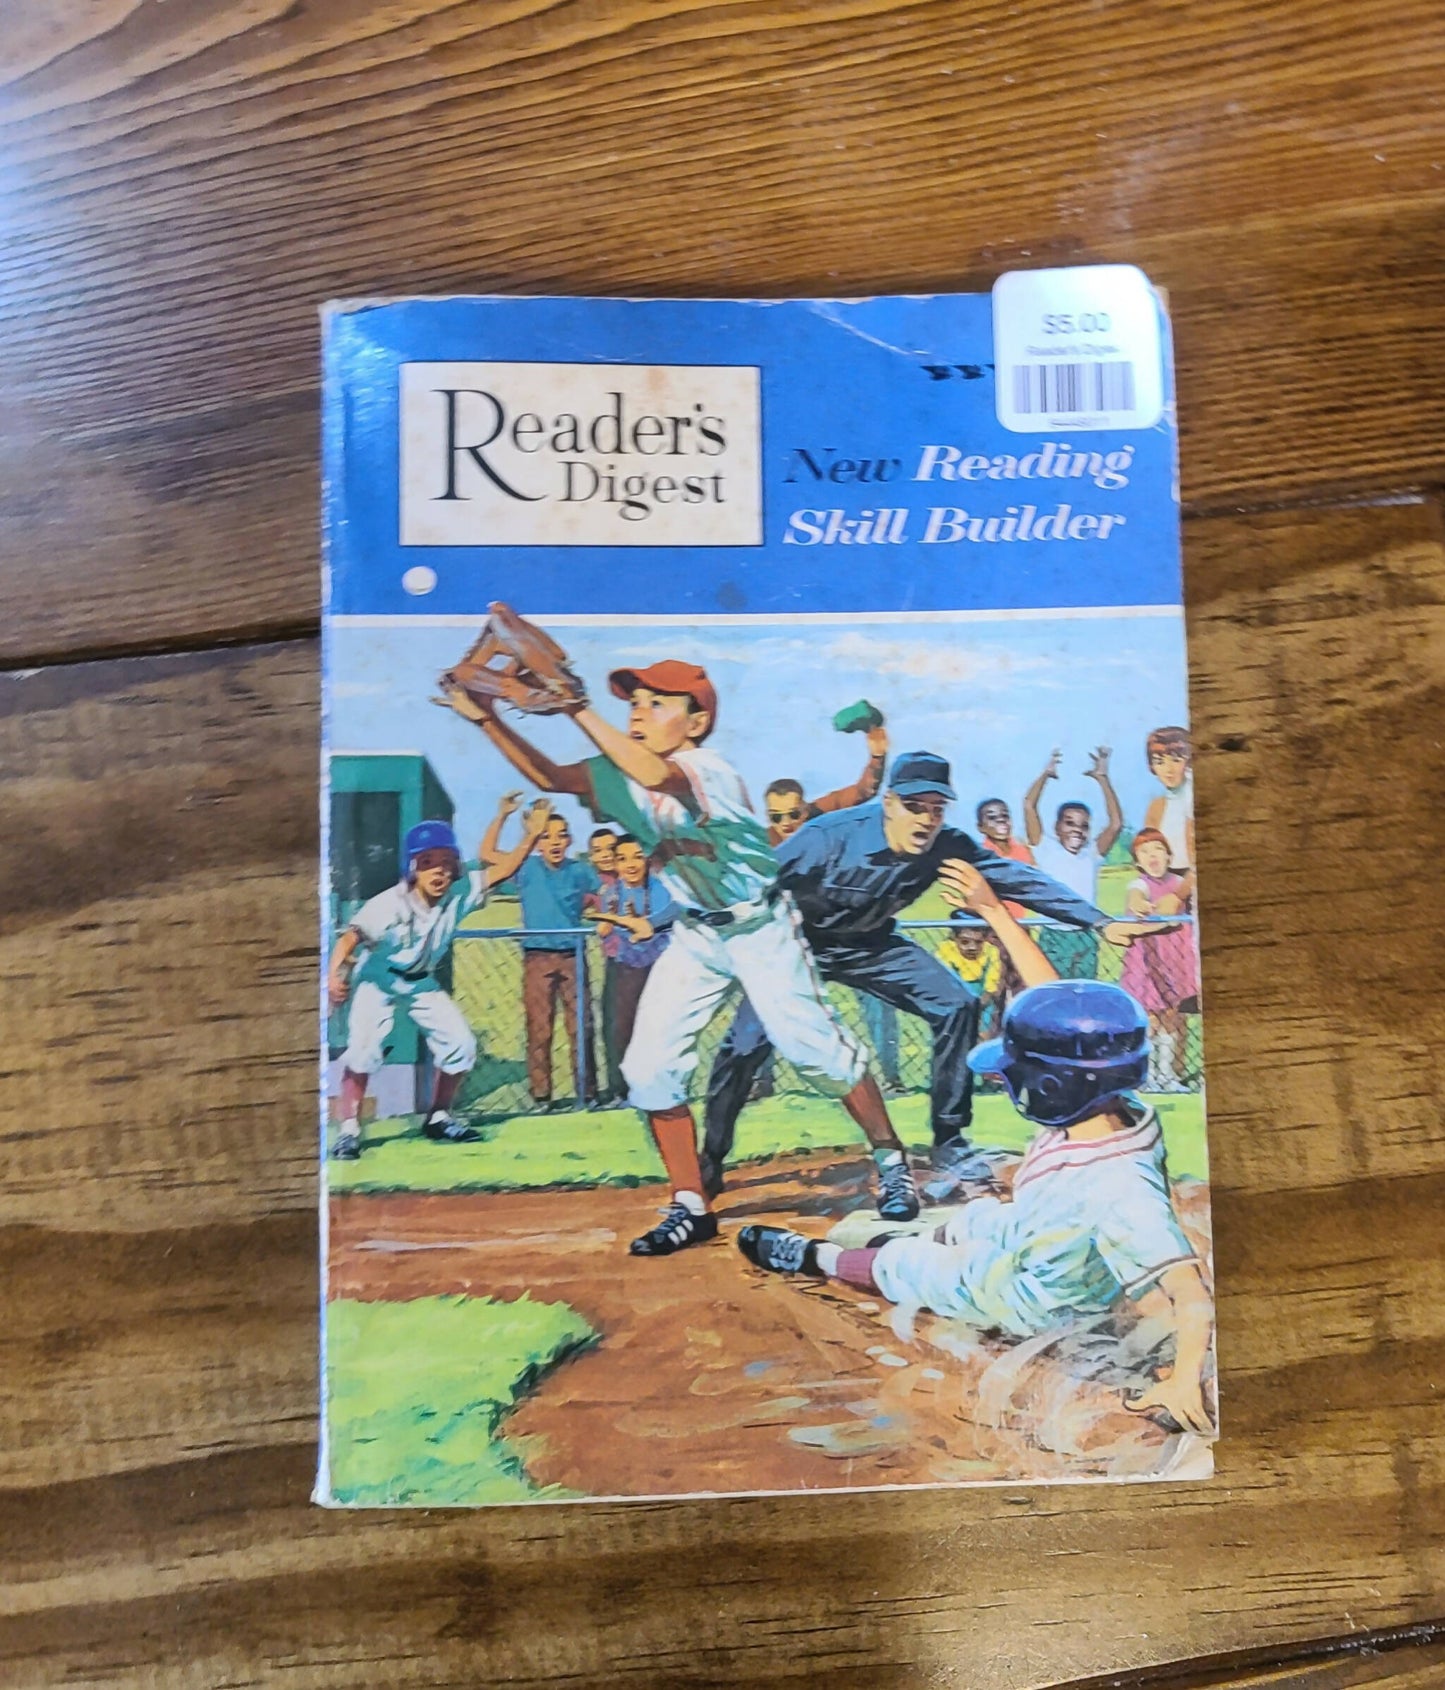 Reader's Digest "Baseball"